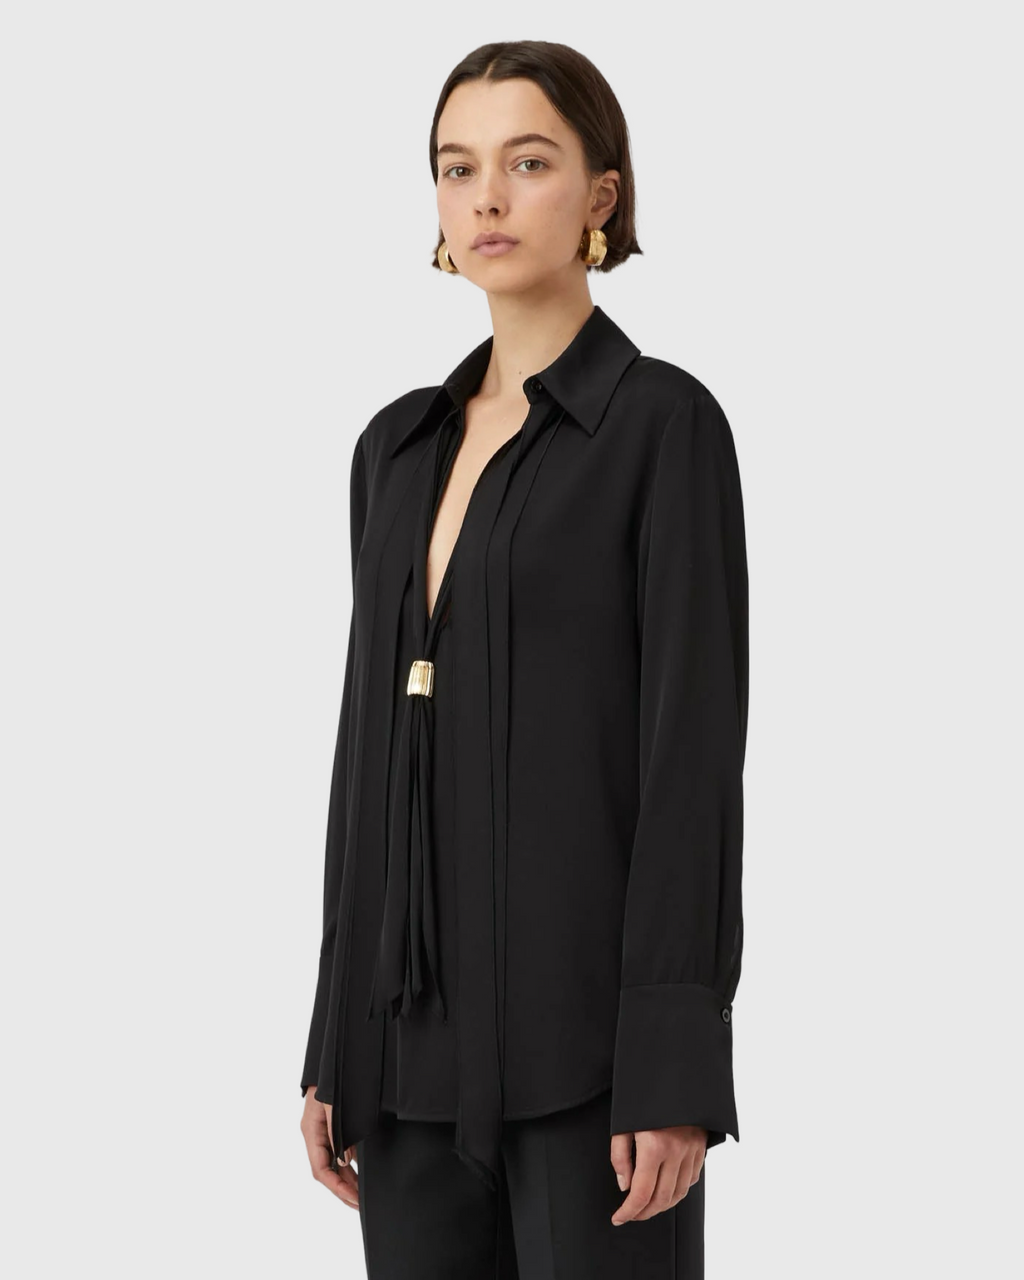 camilla and marc basel blouse black